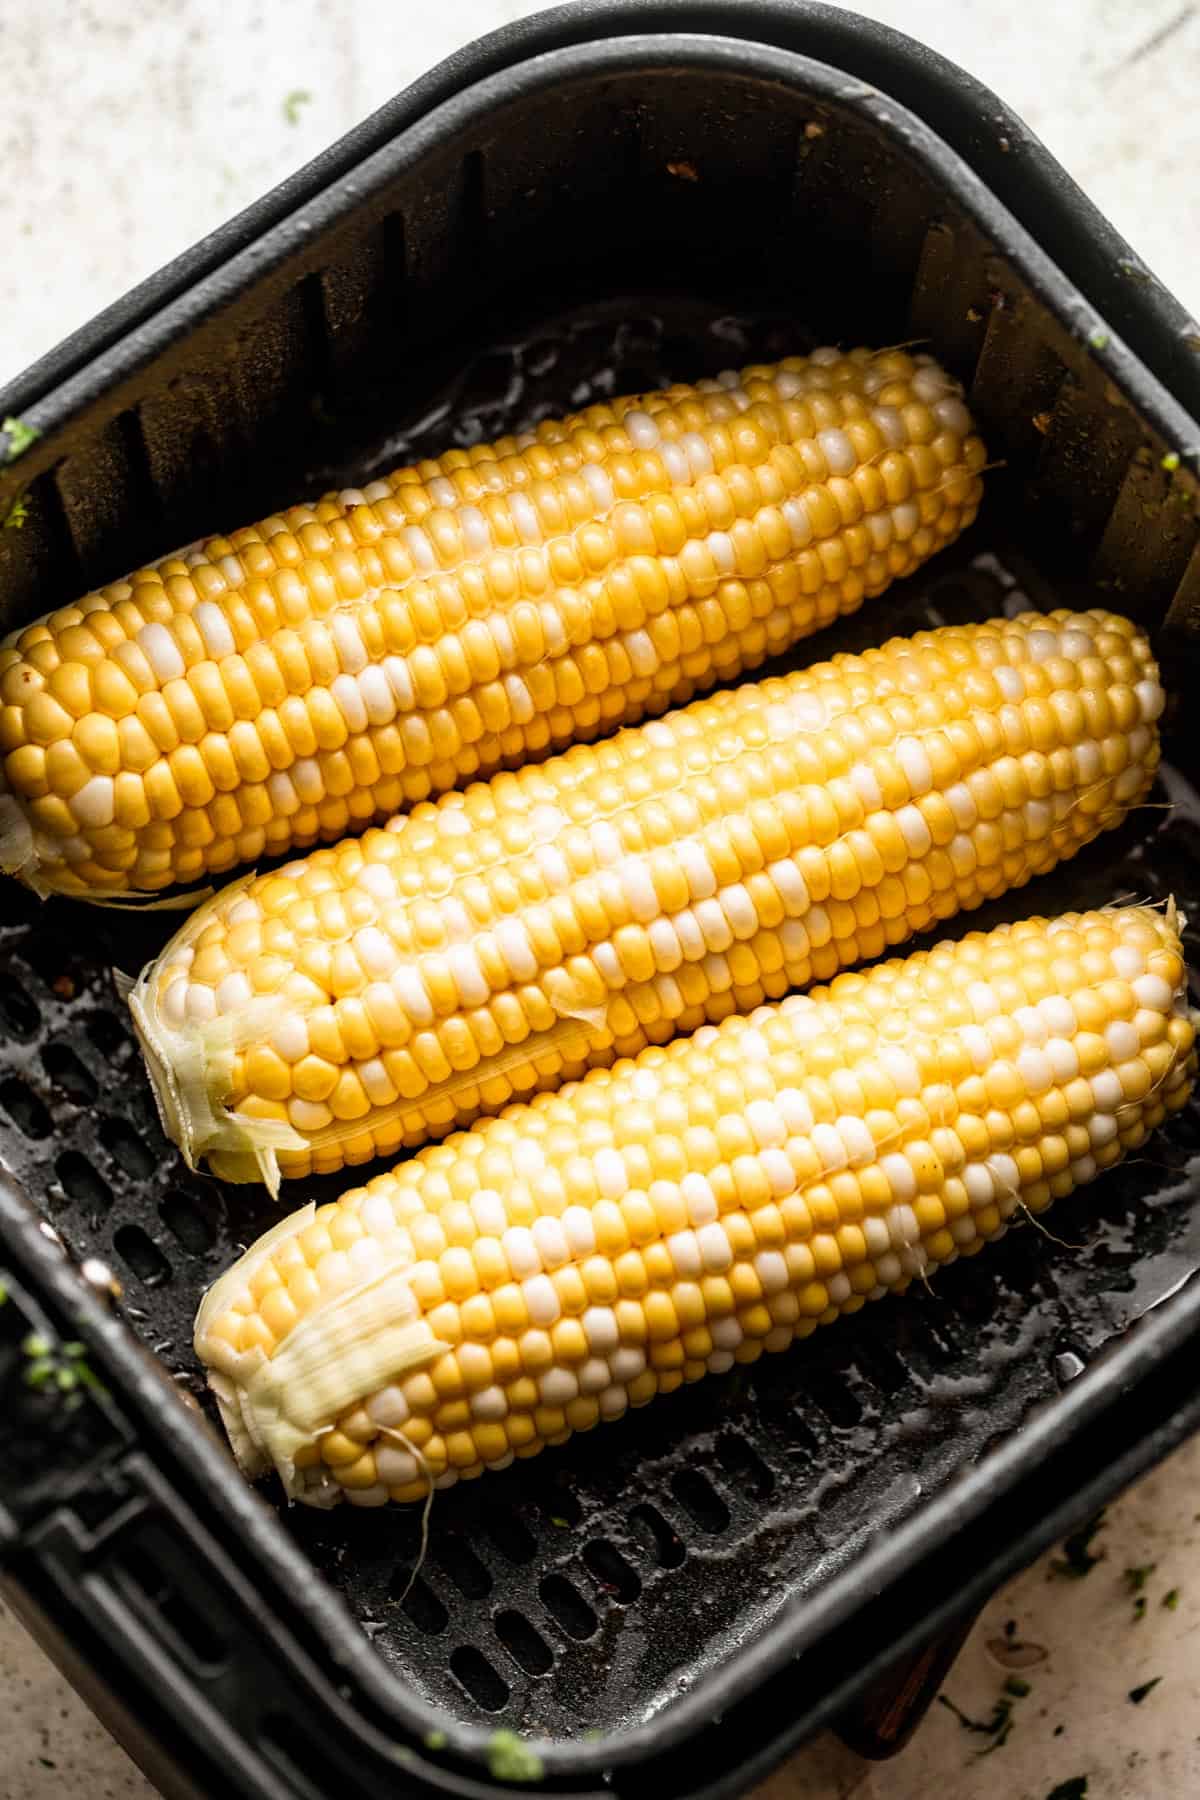 Black air fryer basket with three ears of raw corn arranged inside it.